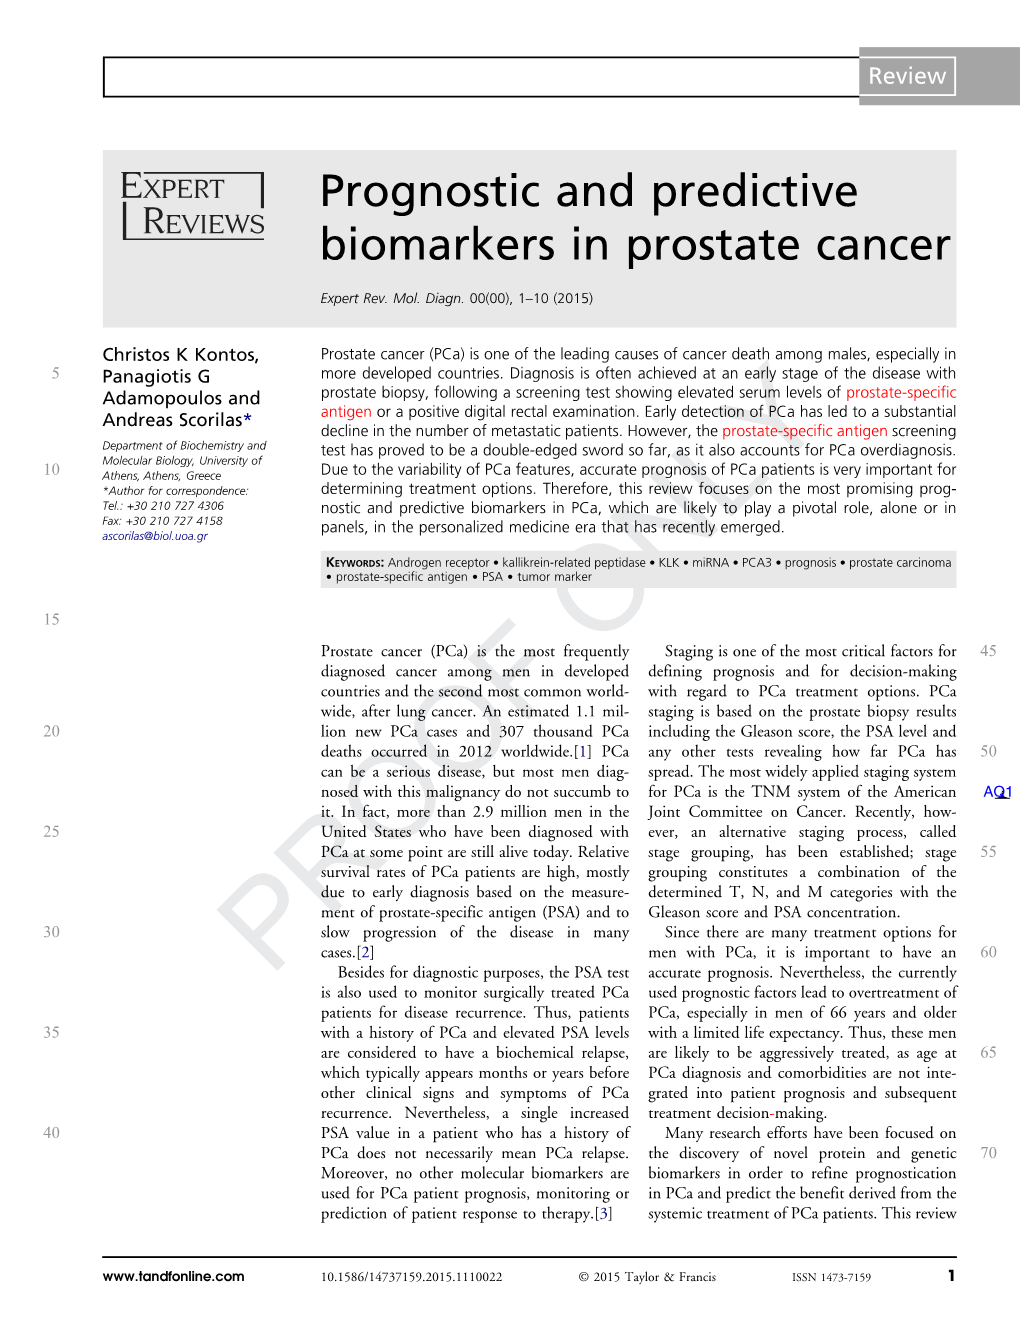 Prognostic and Predictive Biomarkers in Prostate Cancer